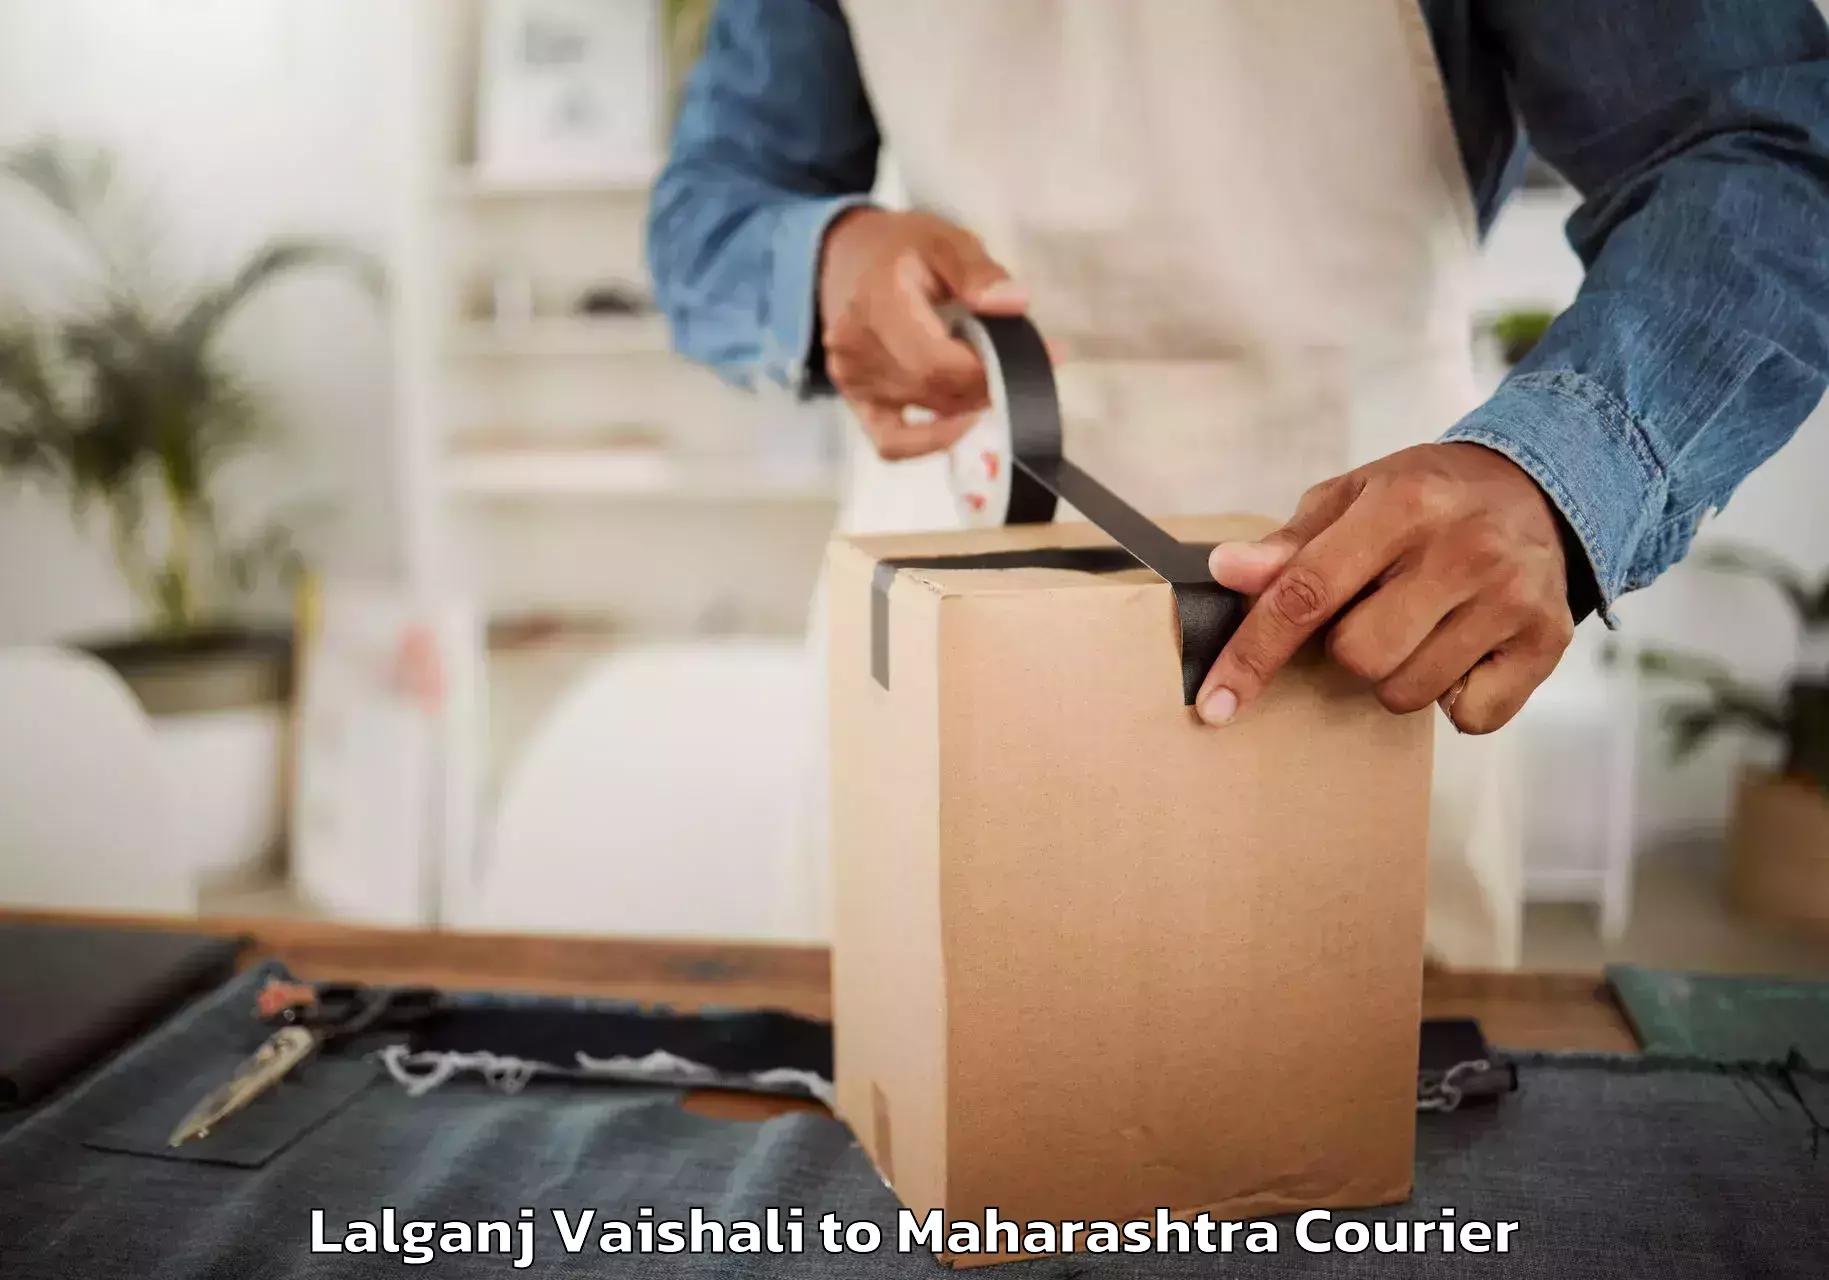 Furniture delivery service Lalganj Vaishali to Maharashtra